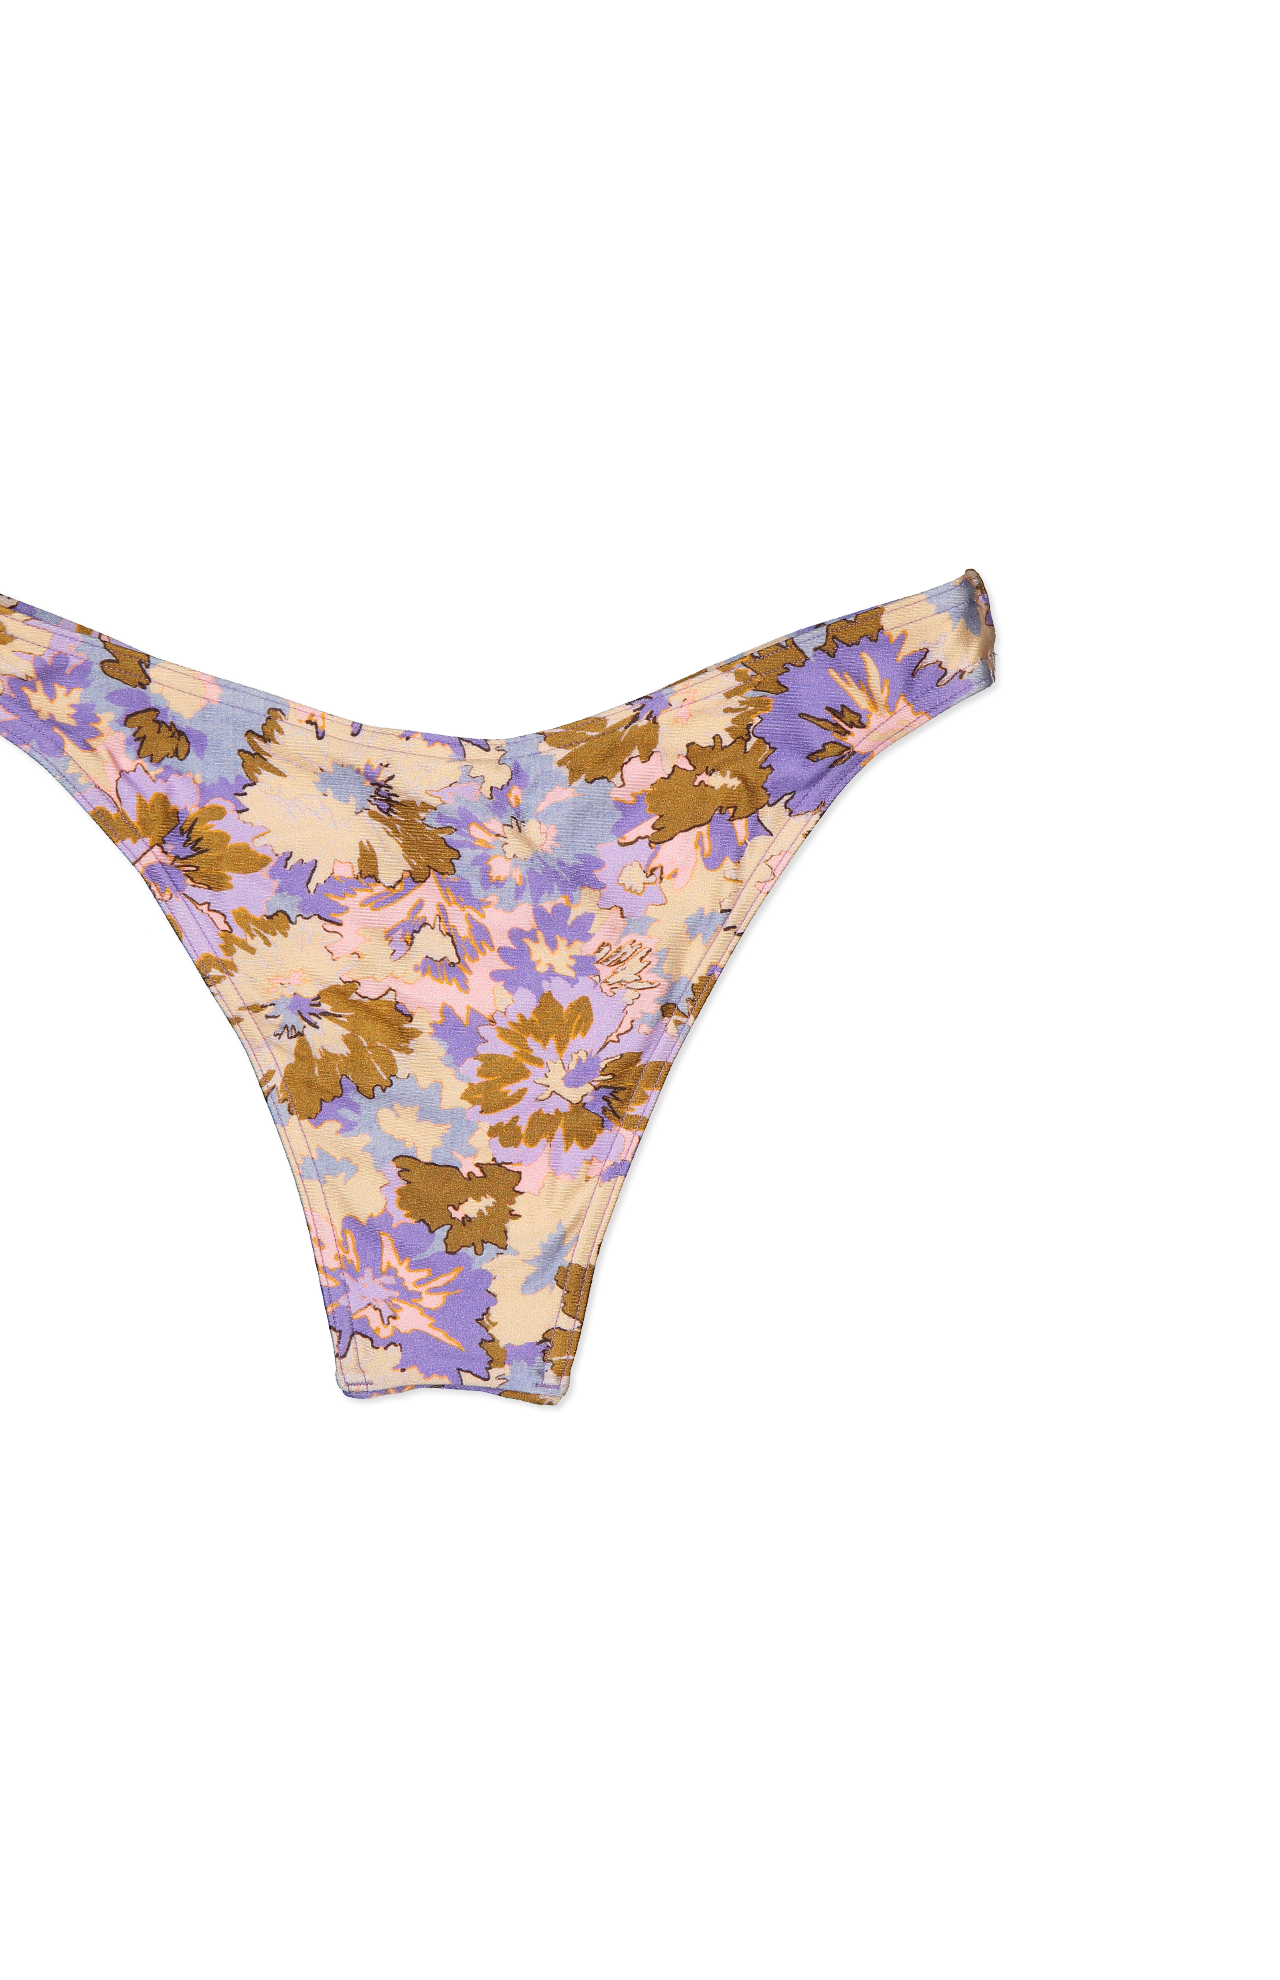 Violet Scoop Bikini Bottom (6834409341043)